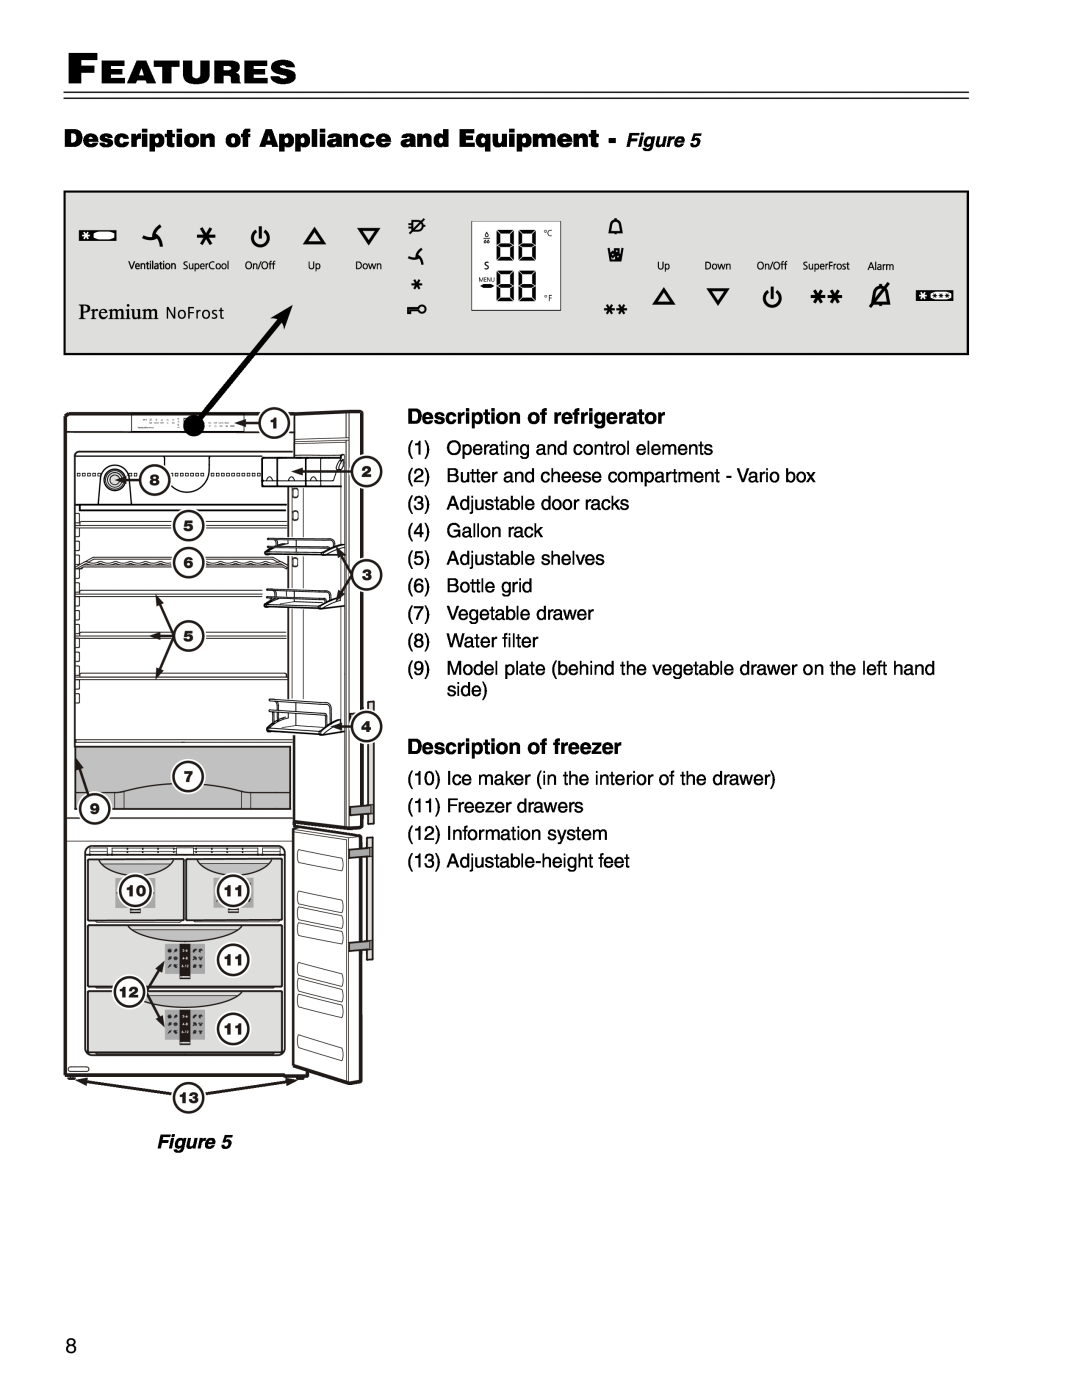 Liebherr CS 1660 manual Features, Description of Appliance and Equipment - Figure, Description of refrigerator 